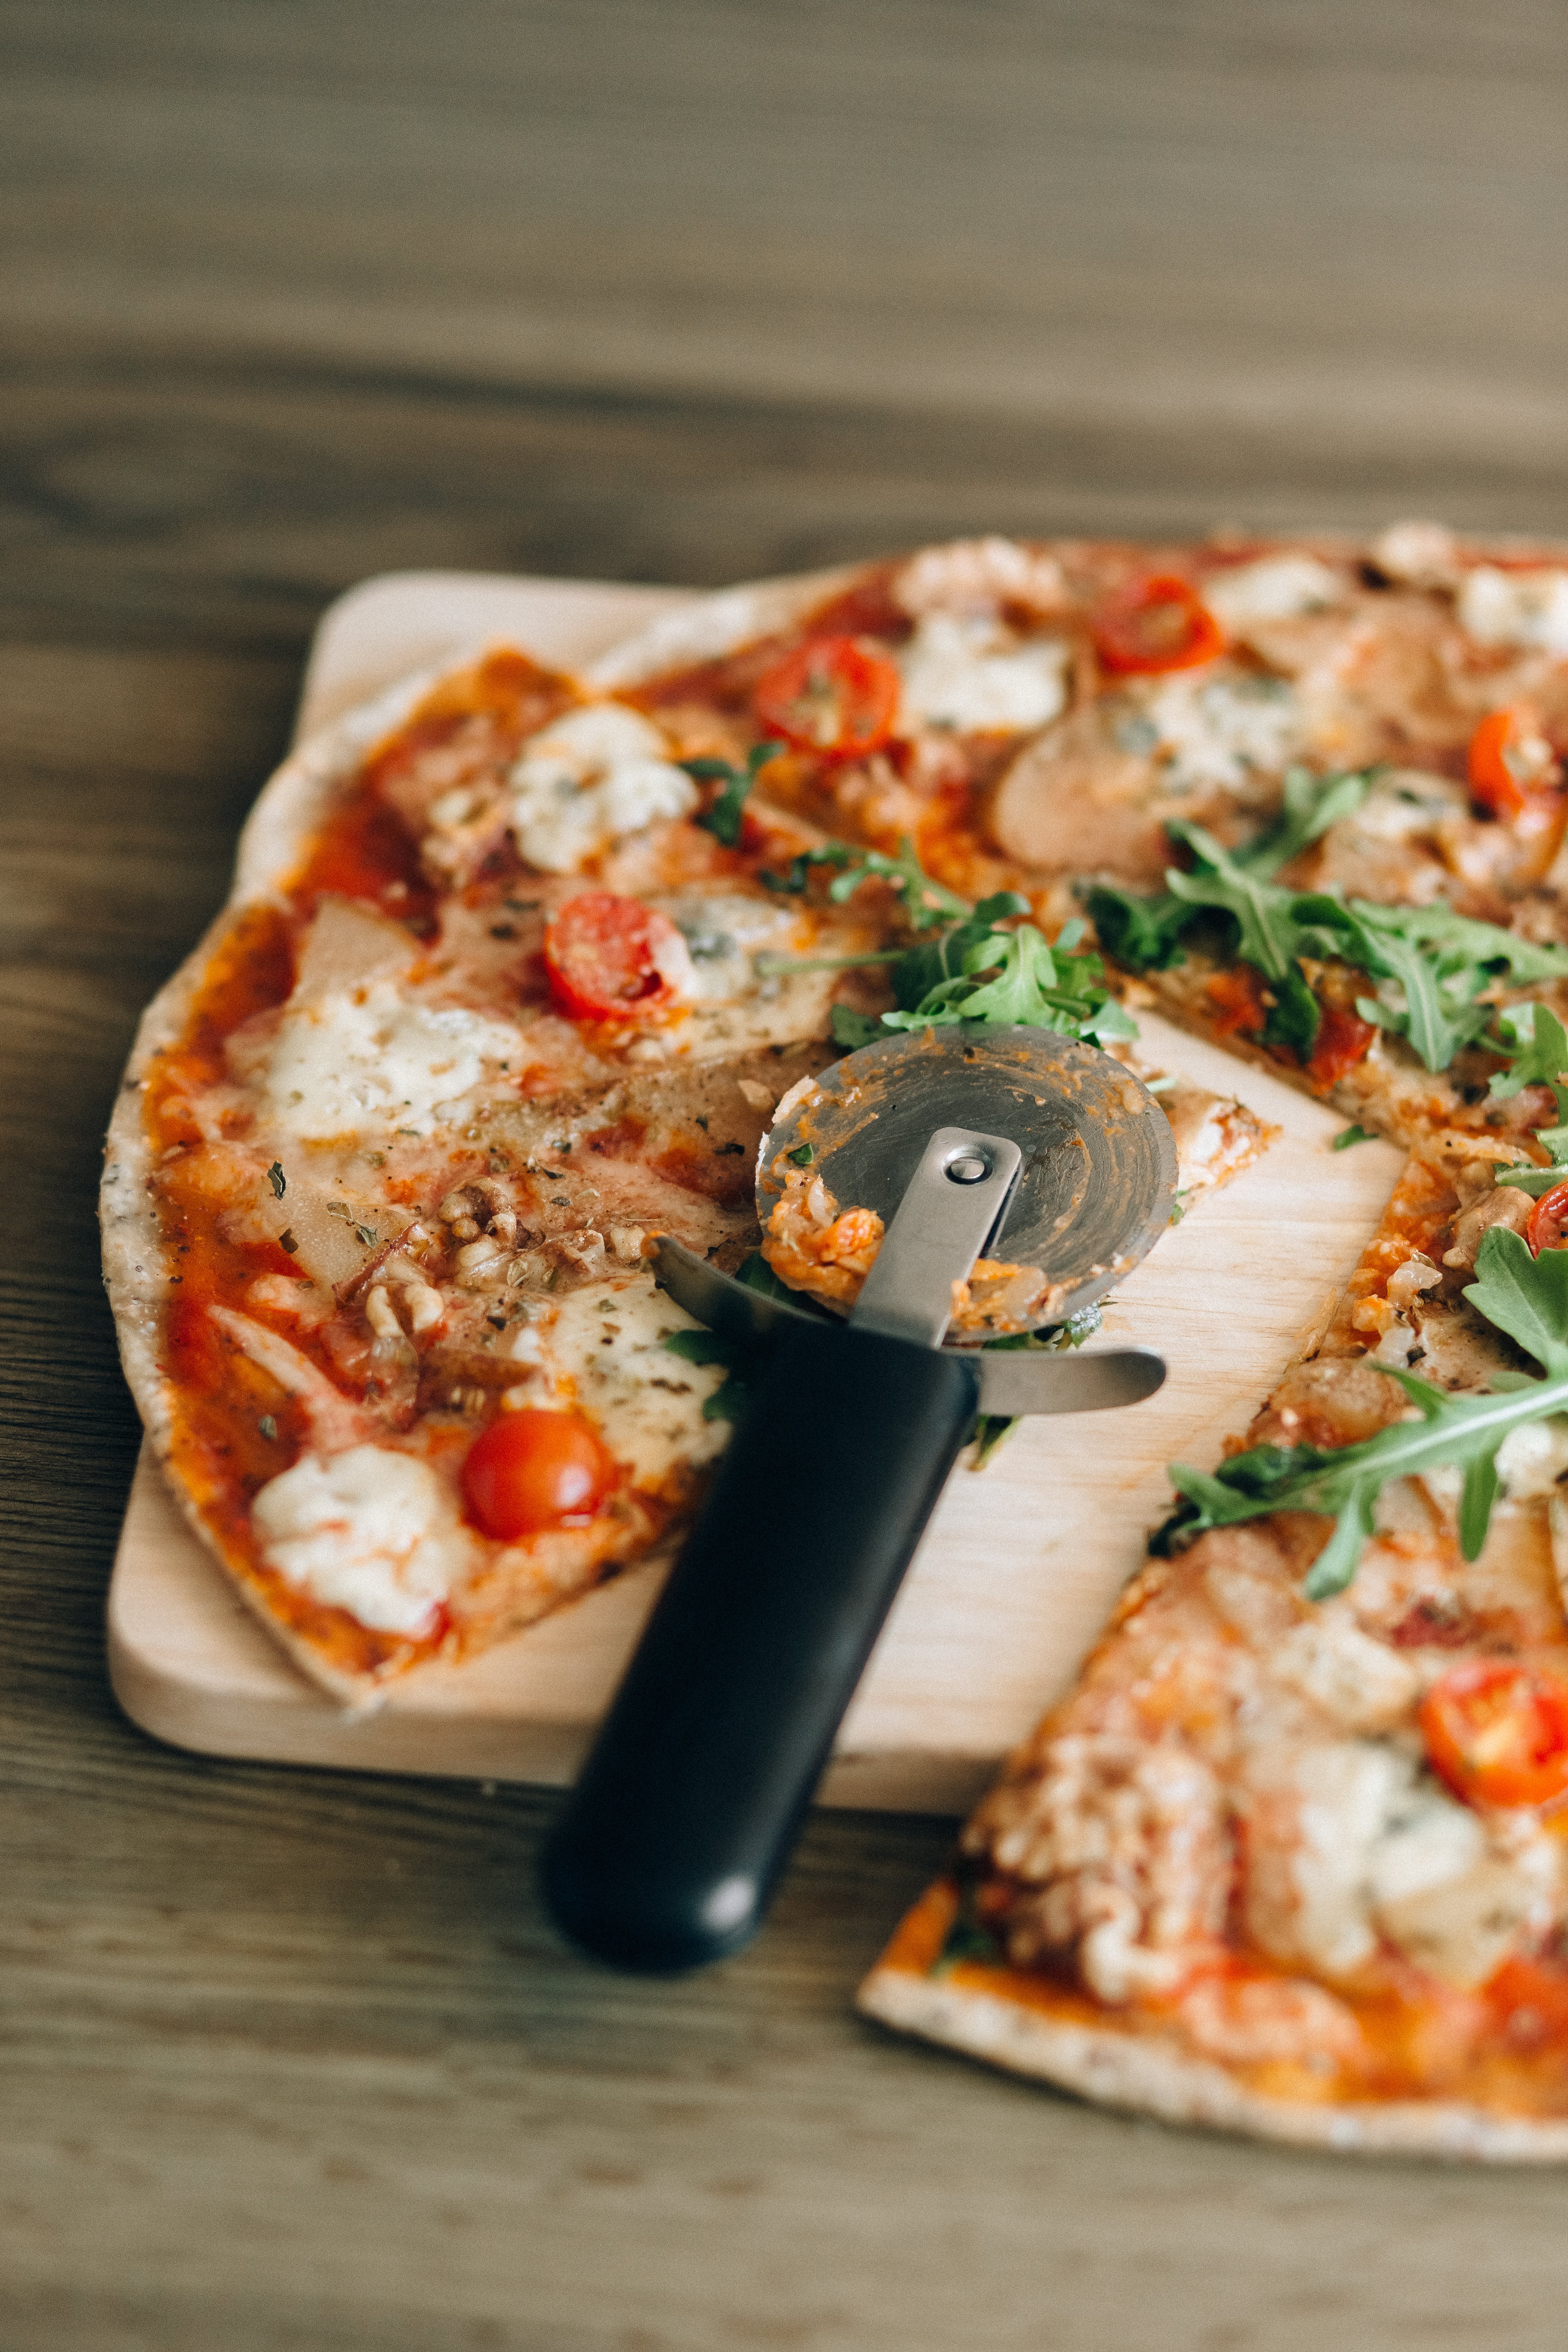 A sliced pizza | Source: Pexels